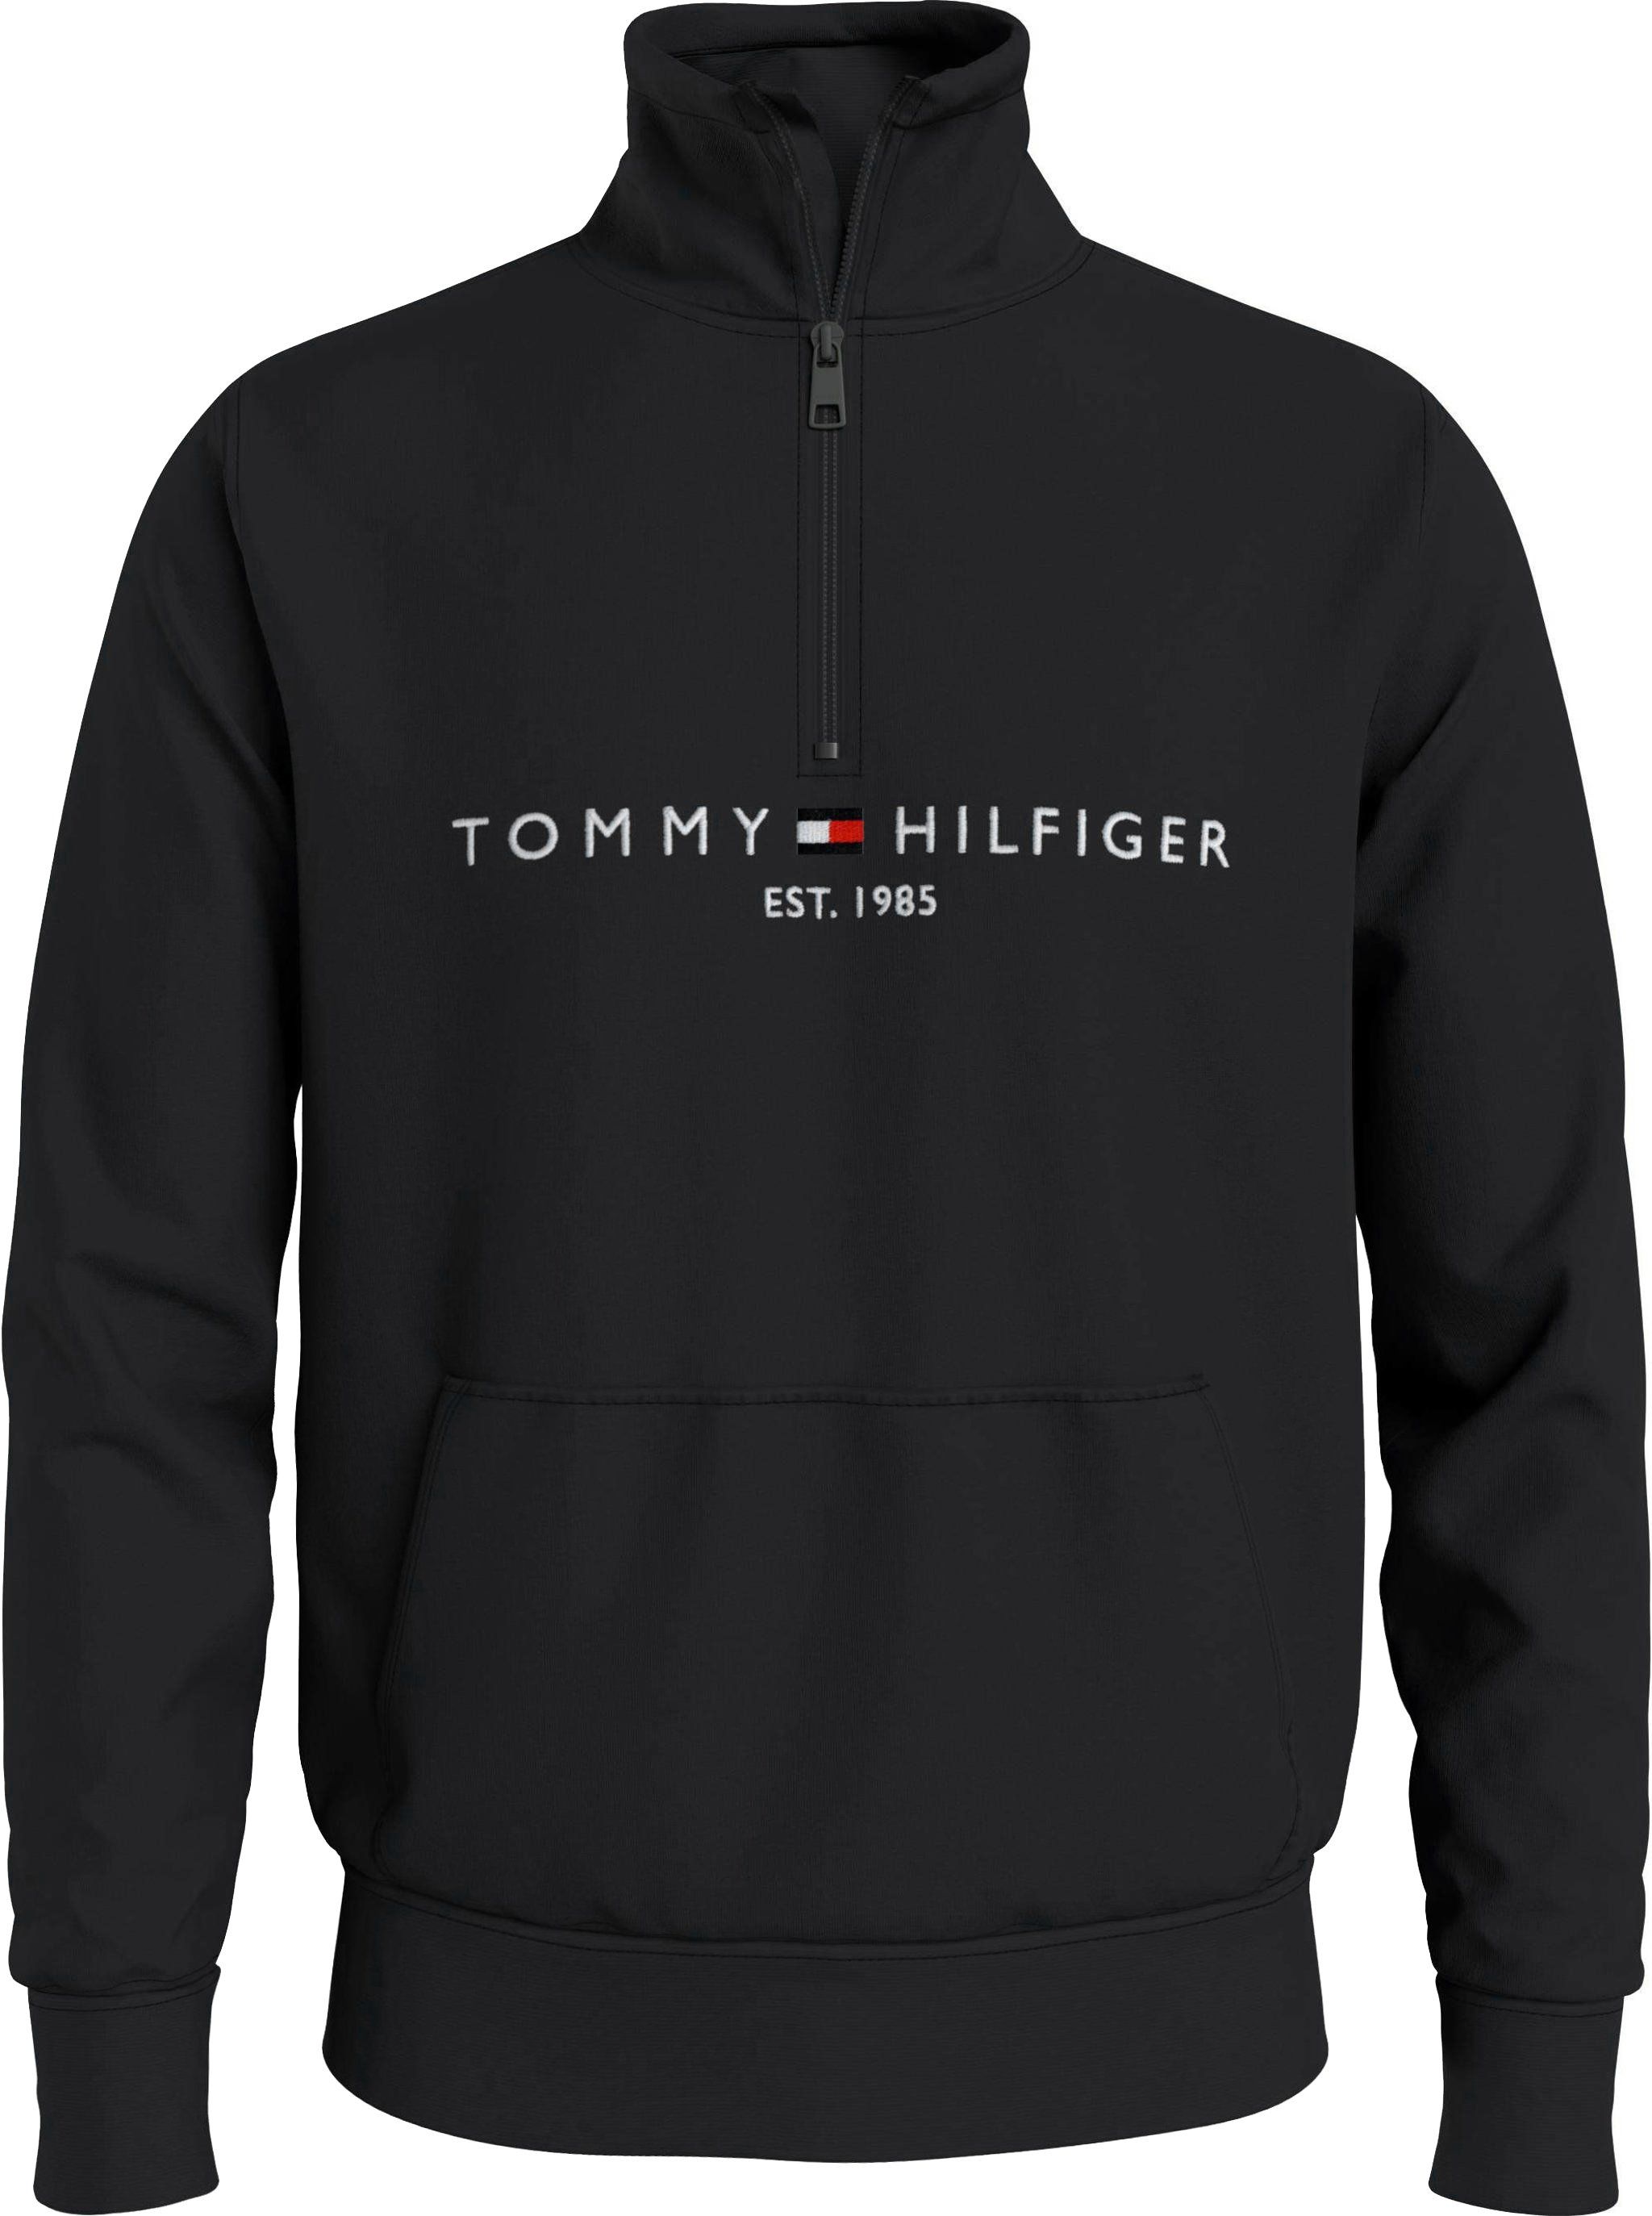 Tommy Hilfiger Big and Tall Mockneck Black size 3XL